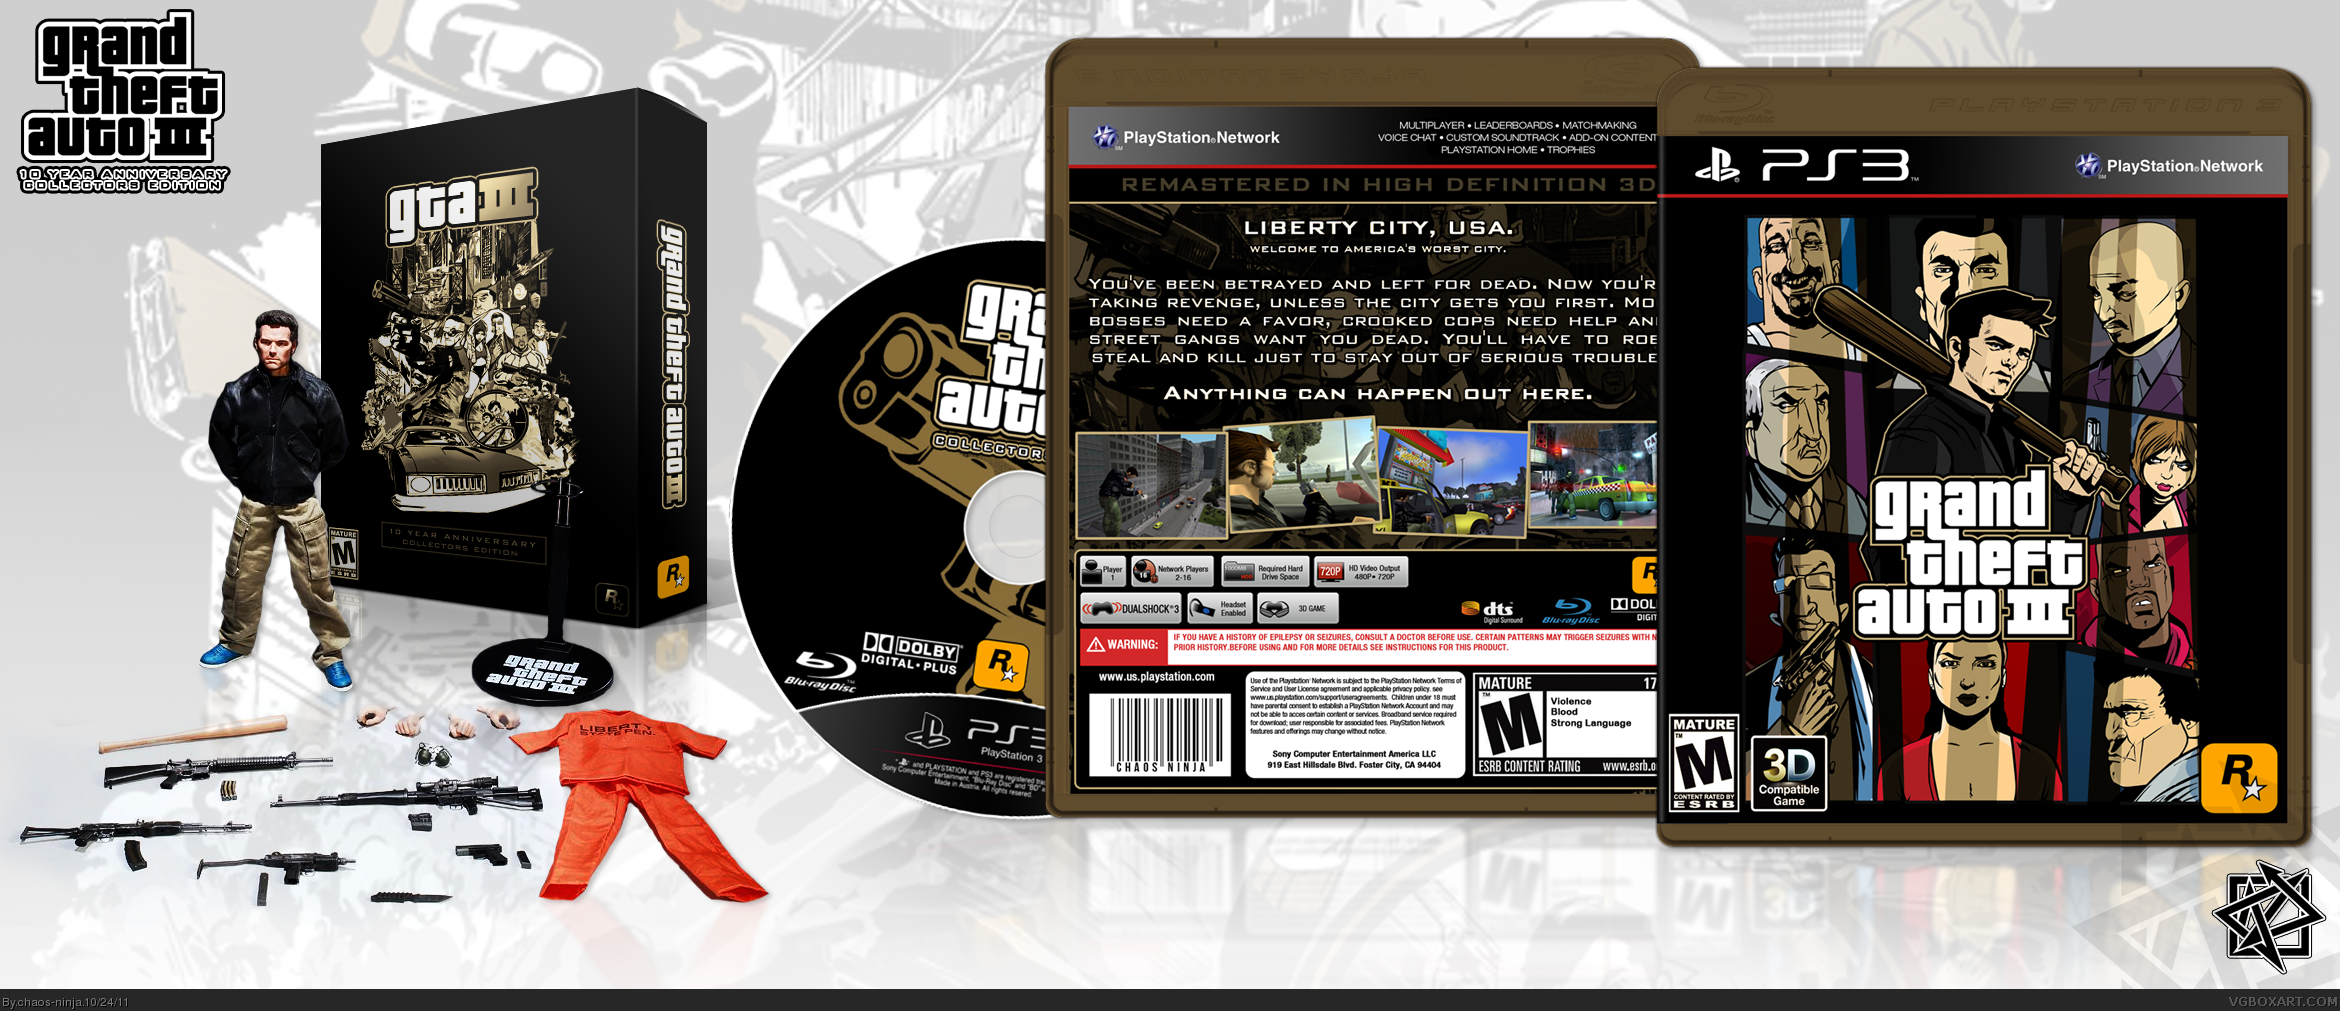 Theft ps3. Grand Theft auto IV коллекционное издание ps3. GTA 3 Collectors Edition. GTA 3 коллекционное издание. Коллекционное издание ГТА 3.